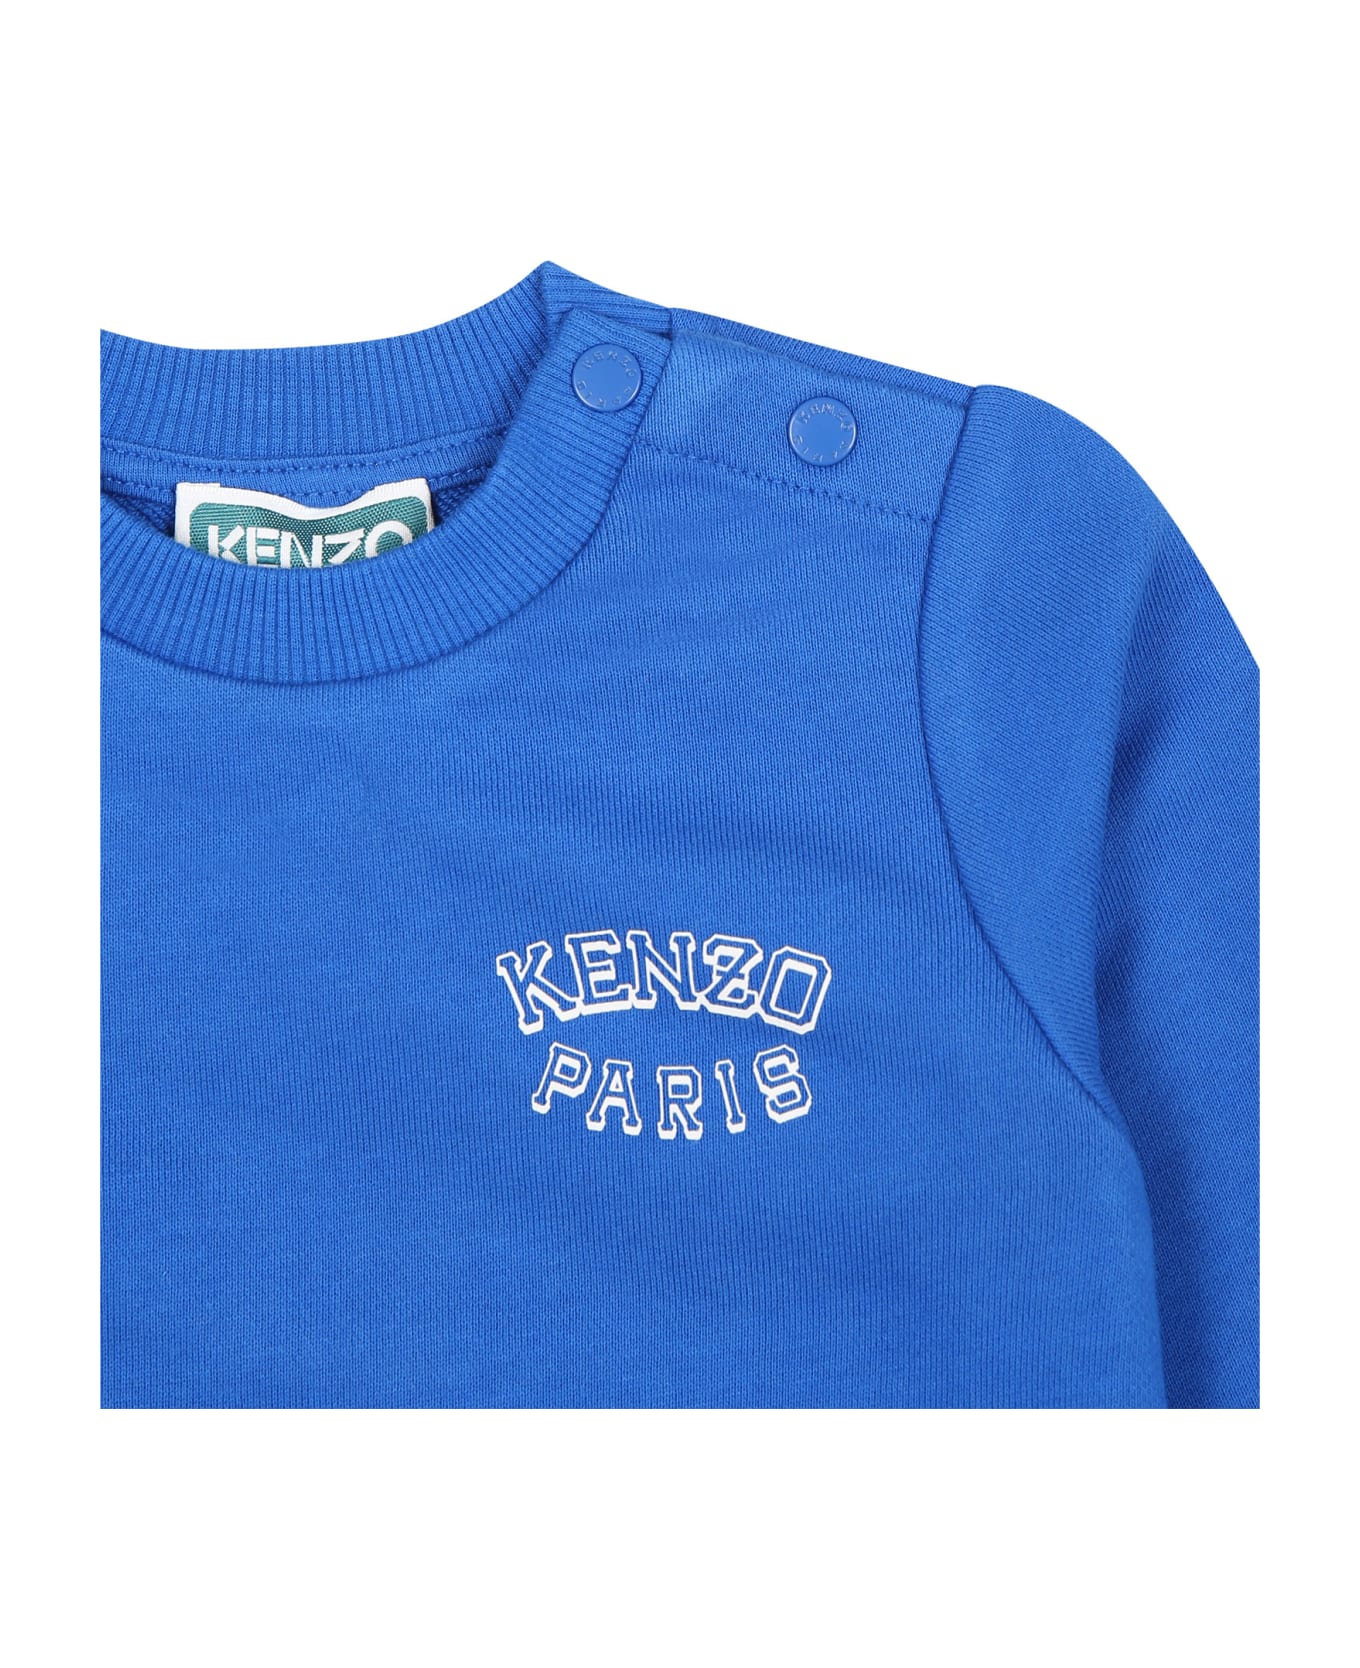 Kenzo Kids Blue Sweatshirt For Baby Boy With Tiger Logo - Light Blue ニットウェア＆スウェットシャツ